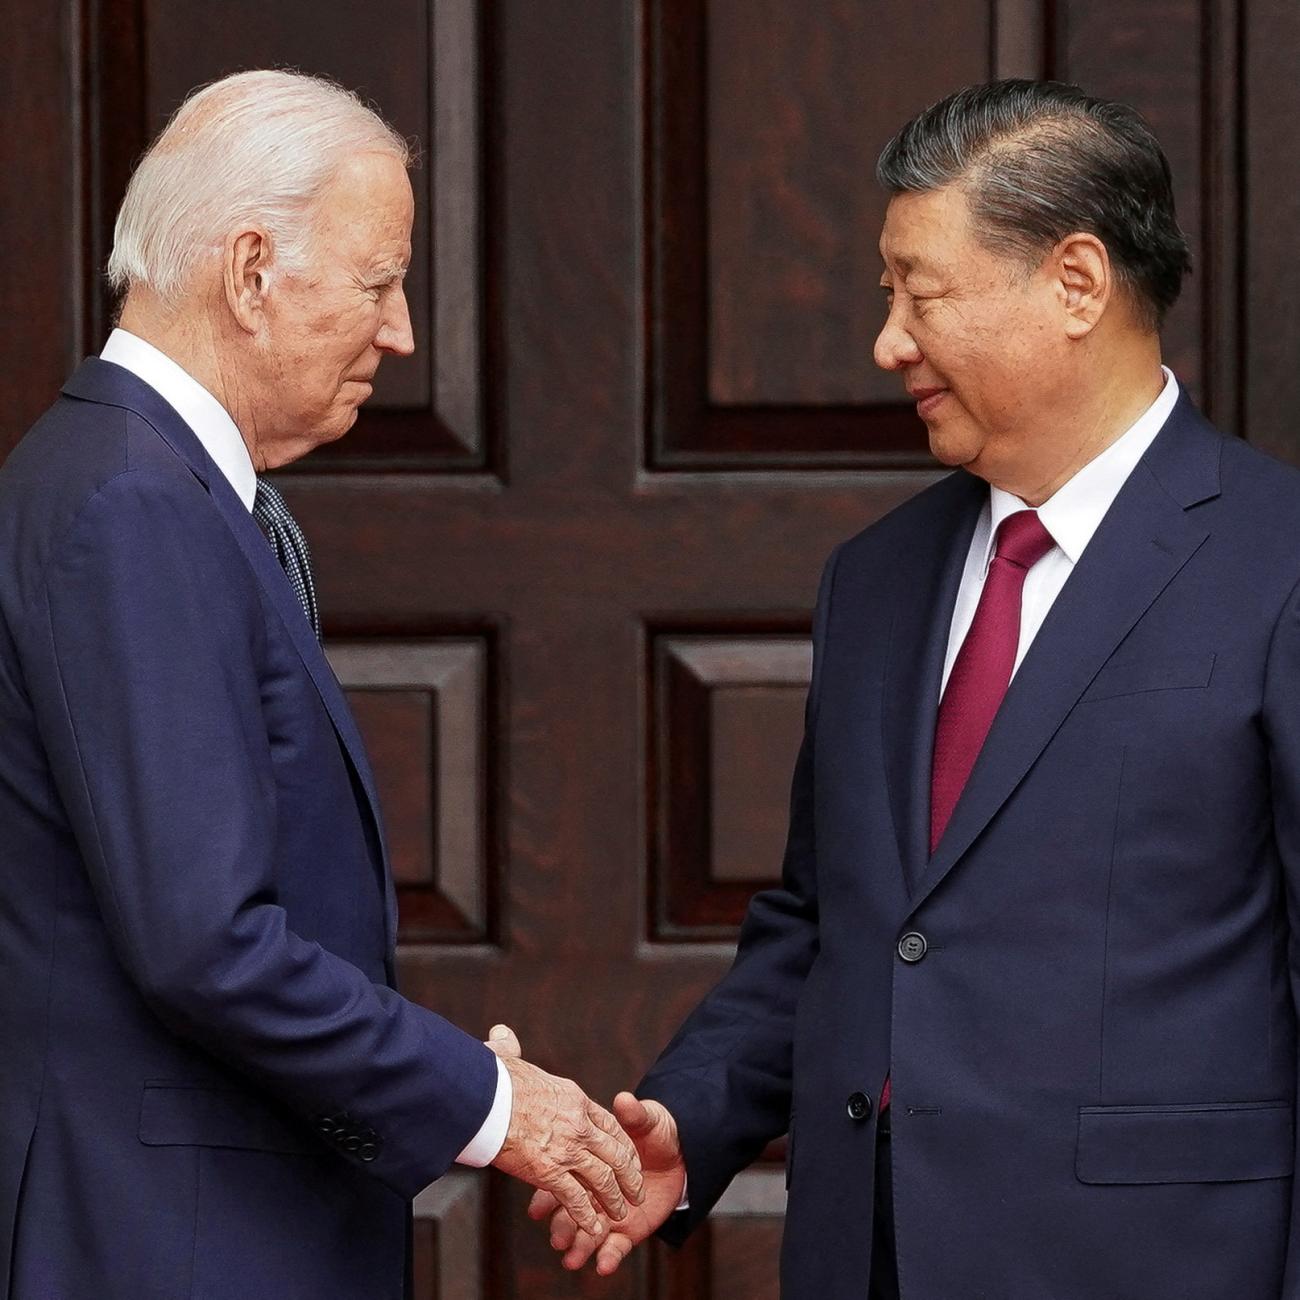 President Joe Biden shakes hands with President Xi Jinping